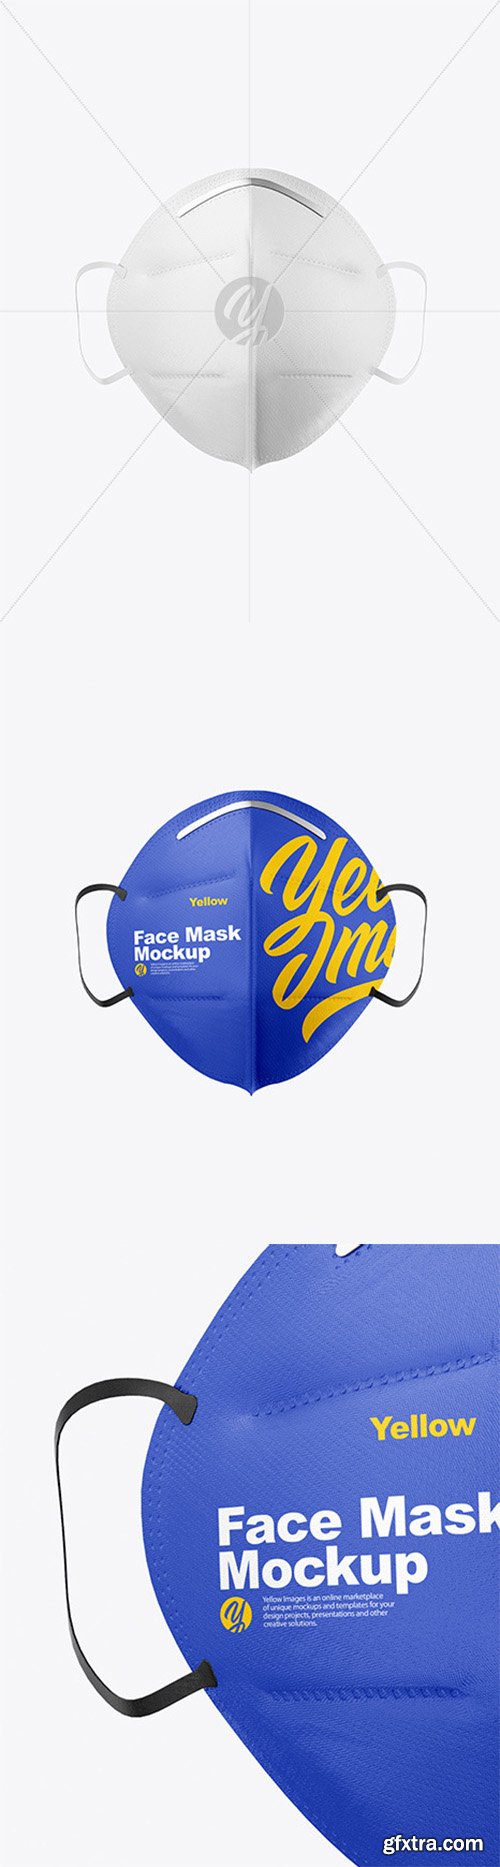 Download Face Mask Mockup 66607 Gfxtra PSD Mockup Templates